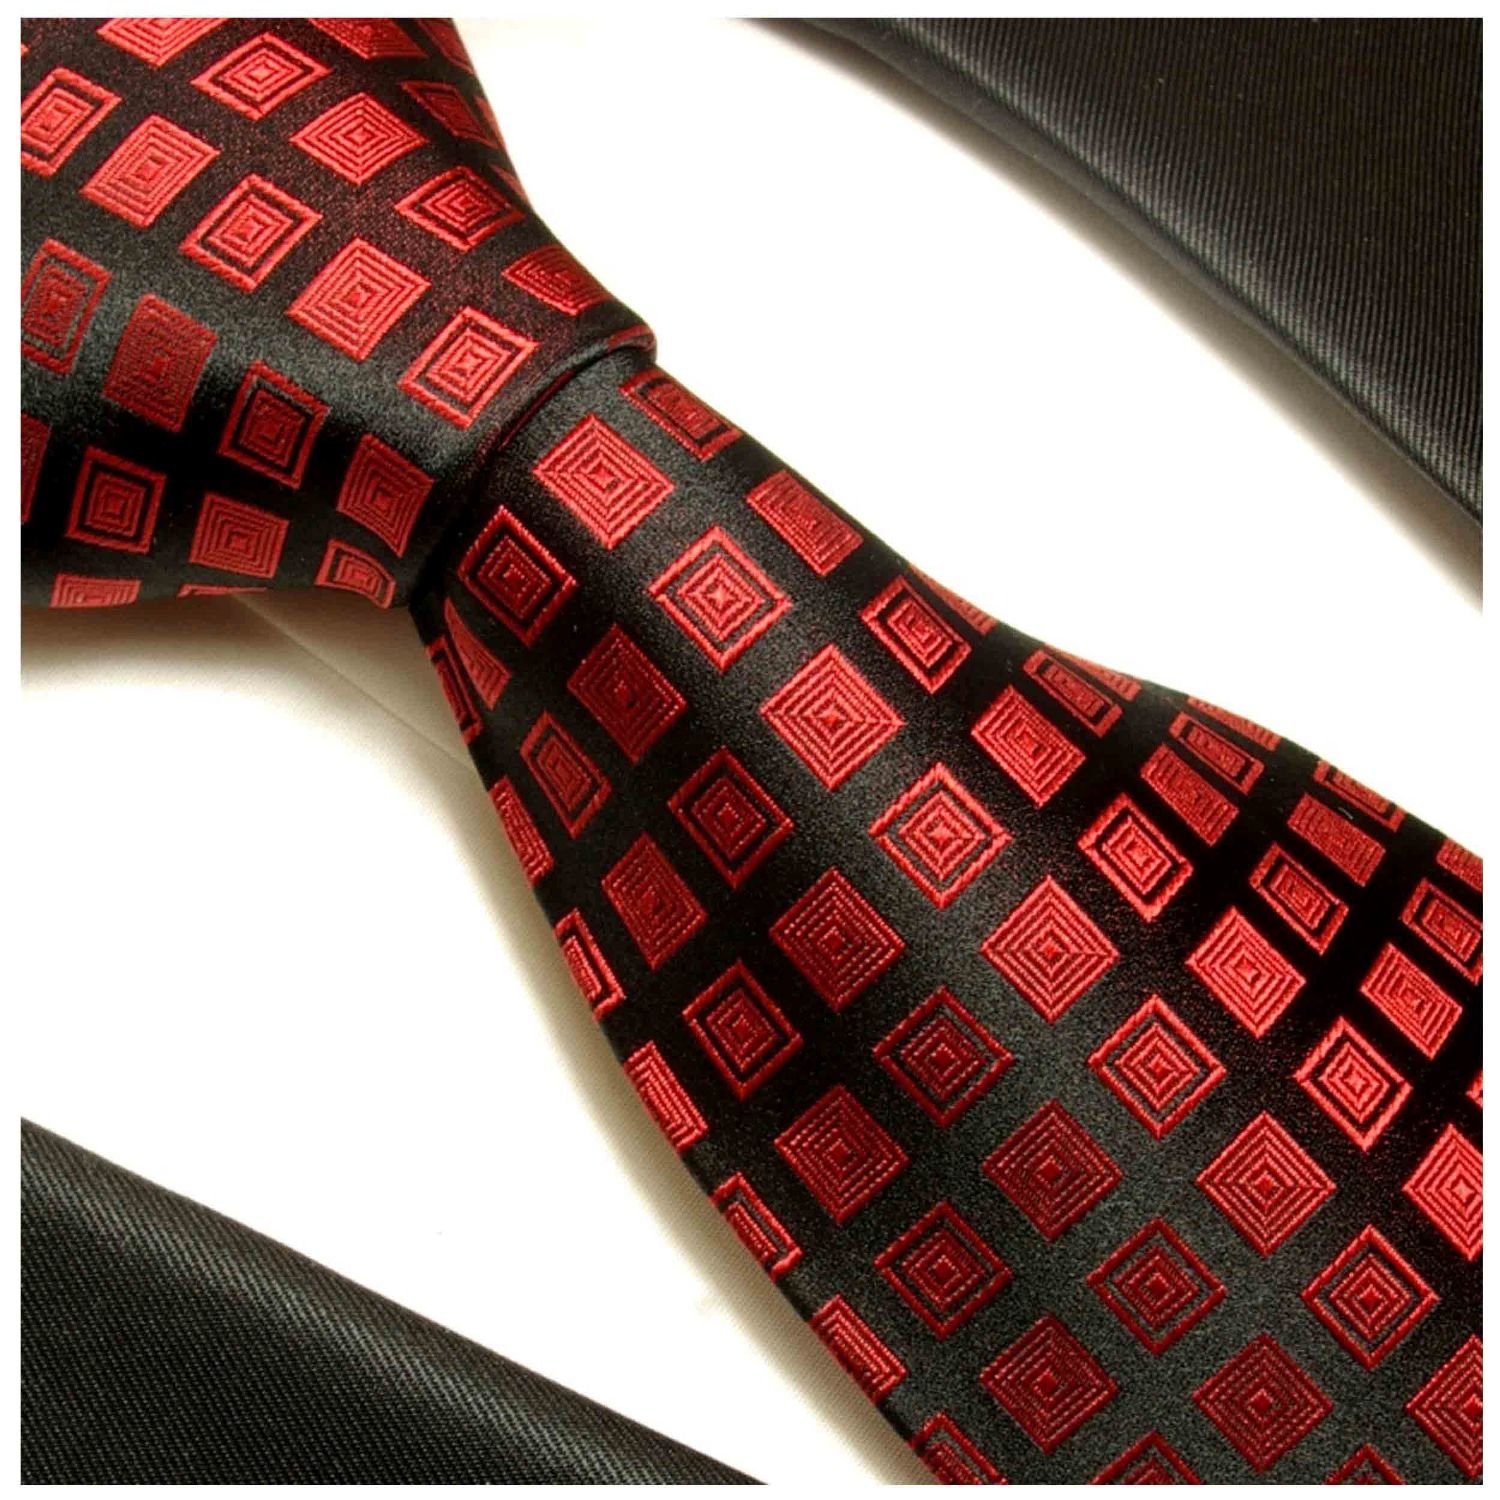 Paul Malone Krawatte Designer Seidenkrawatte Herren Schlips modern kariert  100% Seide Schmal (6cm), rot schwarz 764